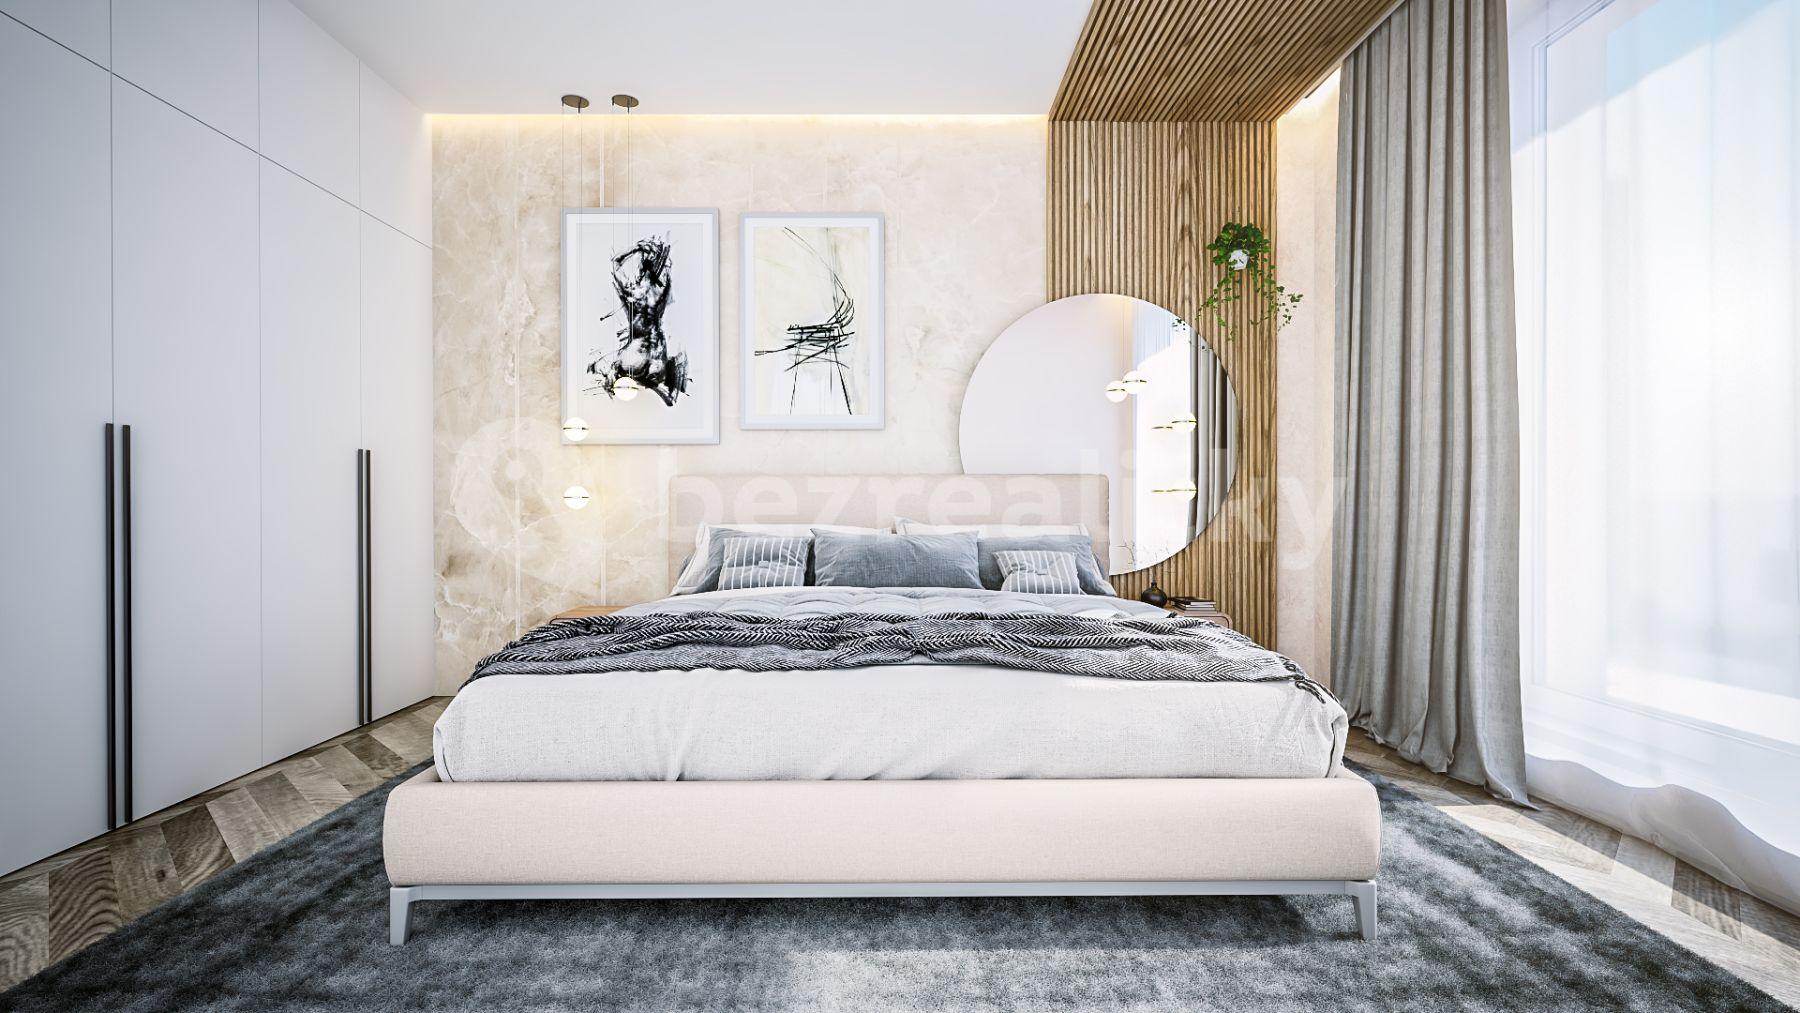 2 bedroom with open-plan kitchen flat for sale, 107 m², Na Neklance, Prague, Prague